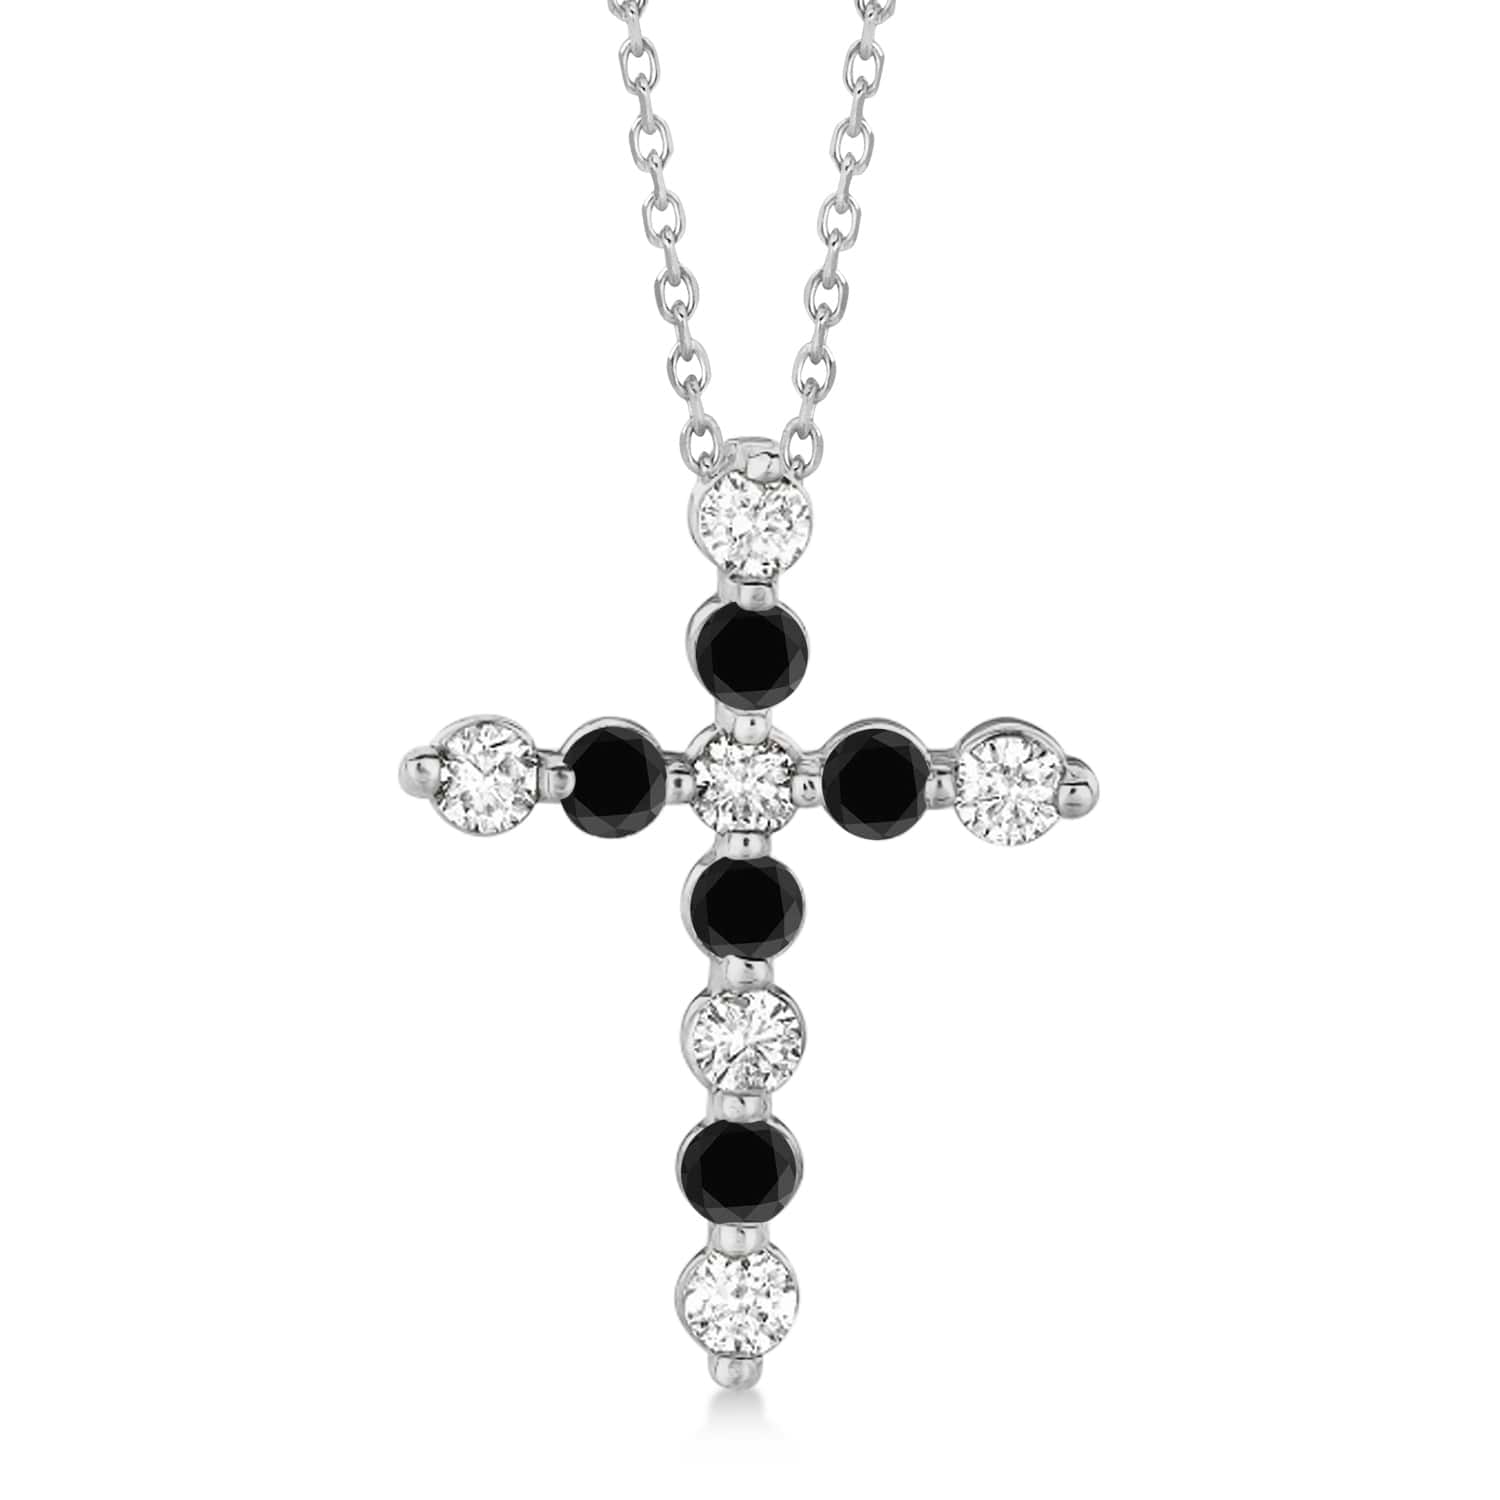 Black & White Diamond Cross Pendant Necklace